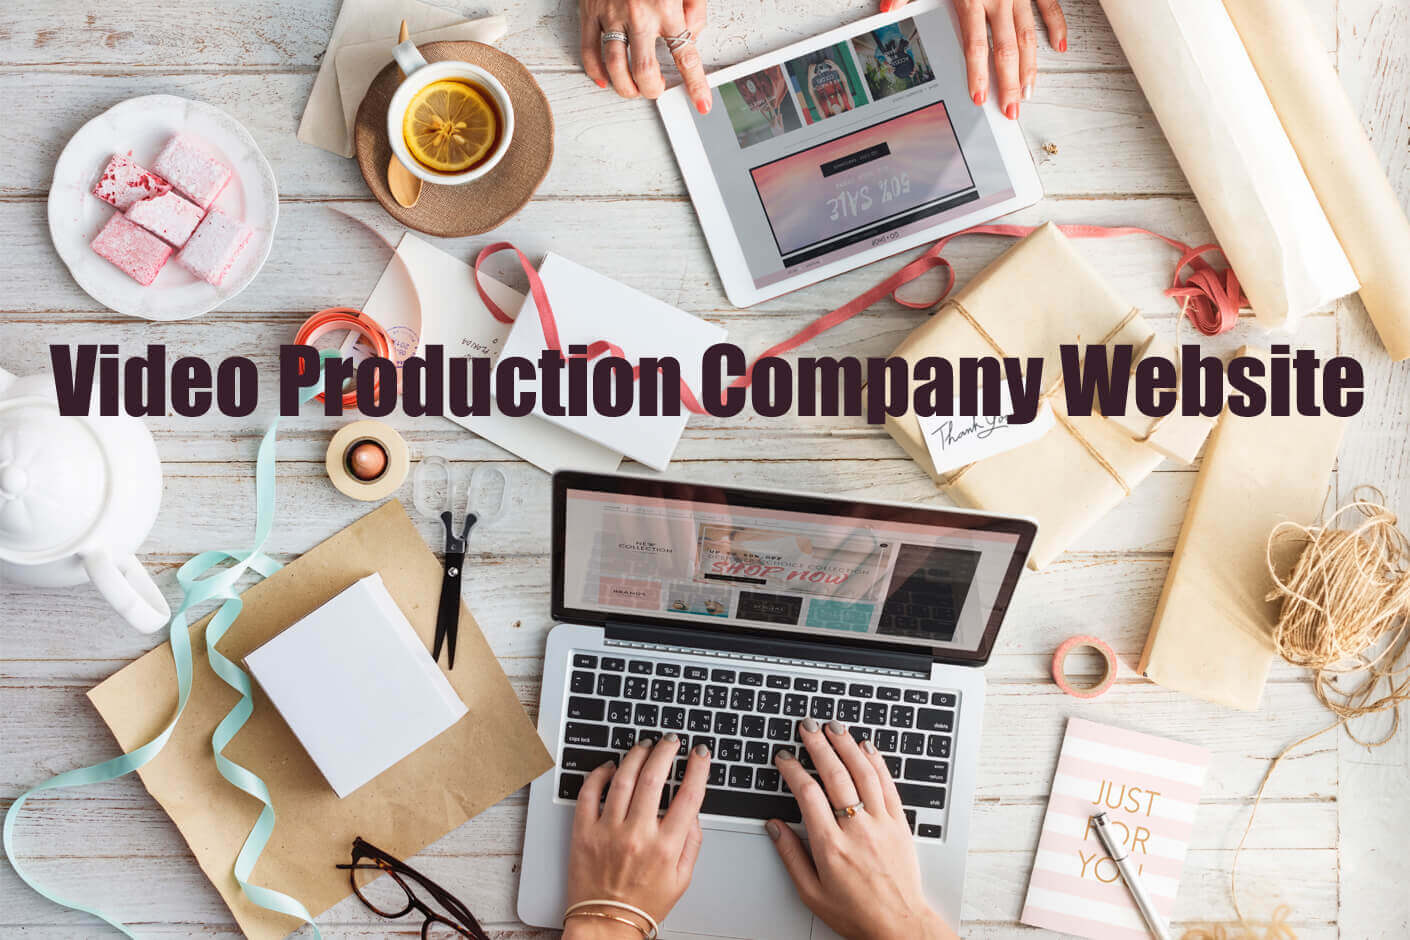 Production Company Website